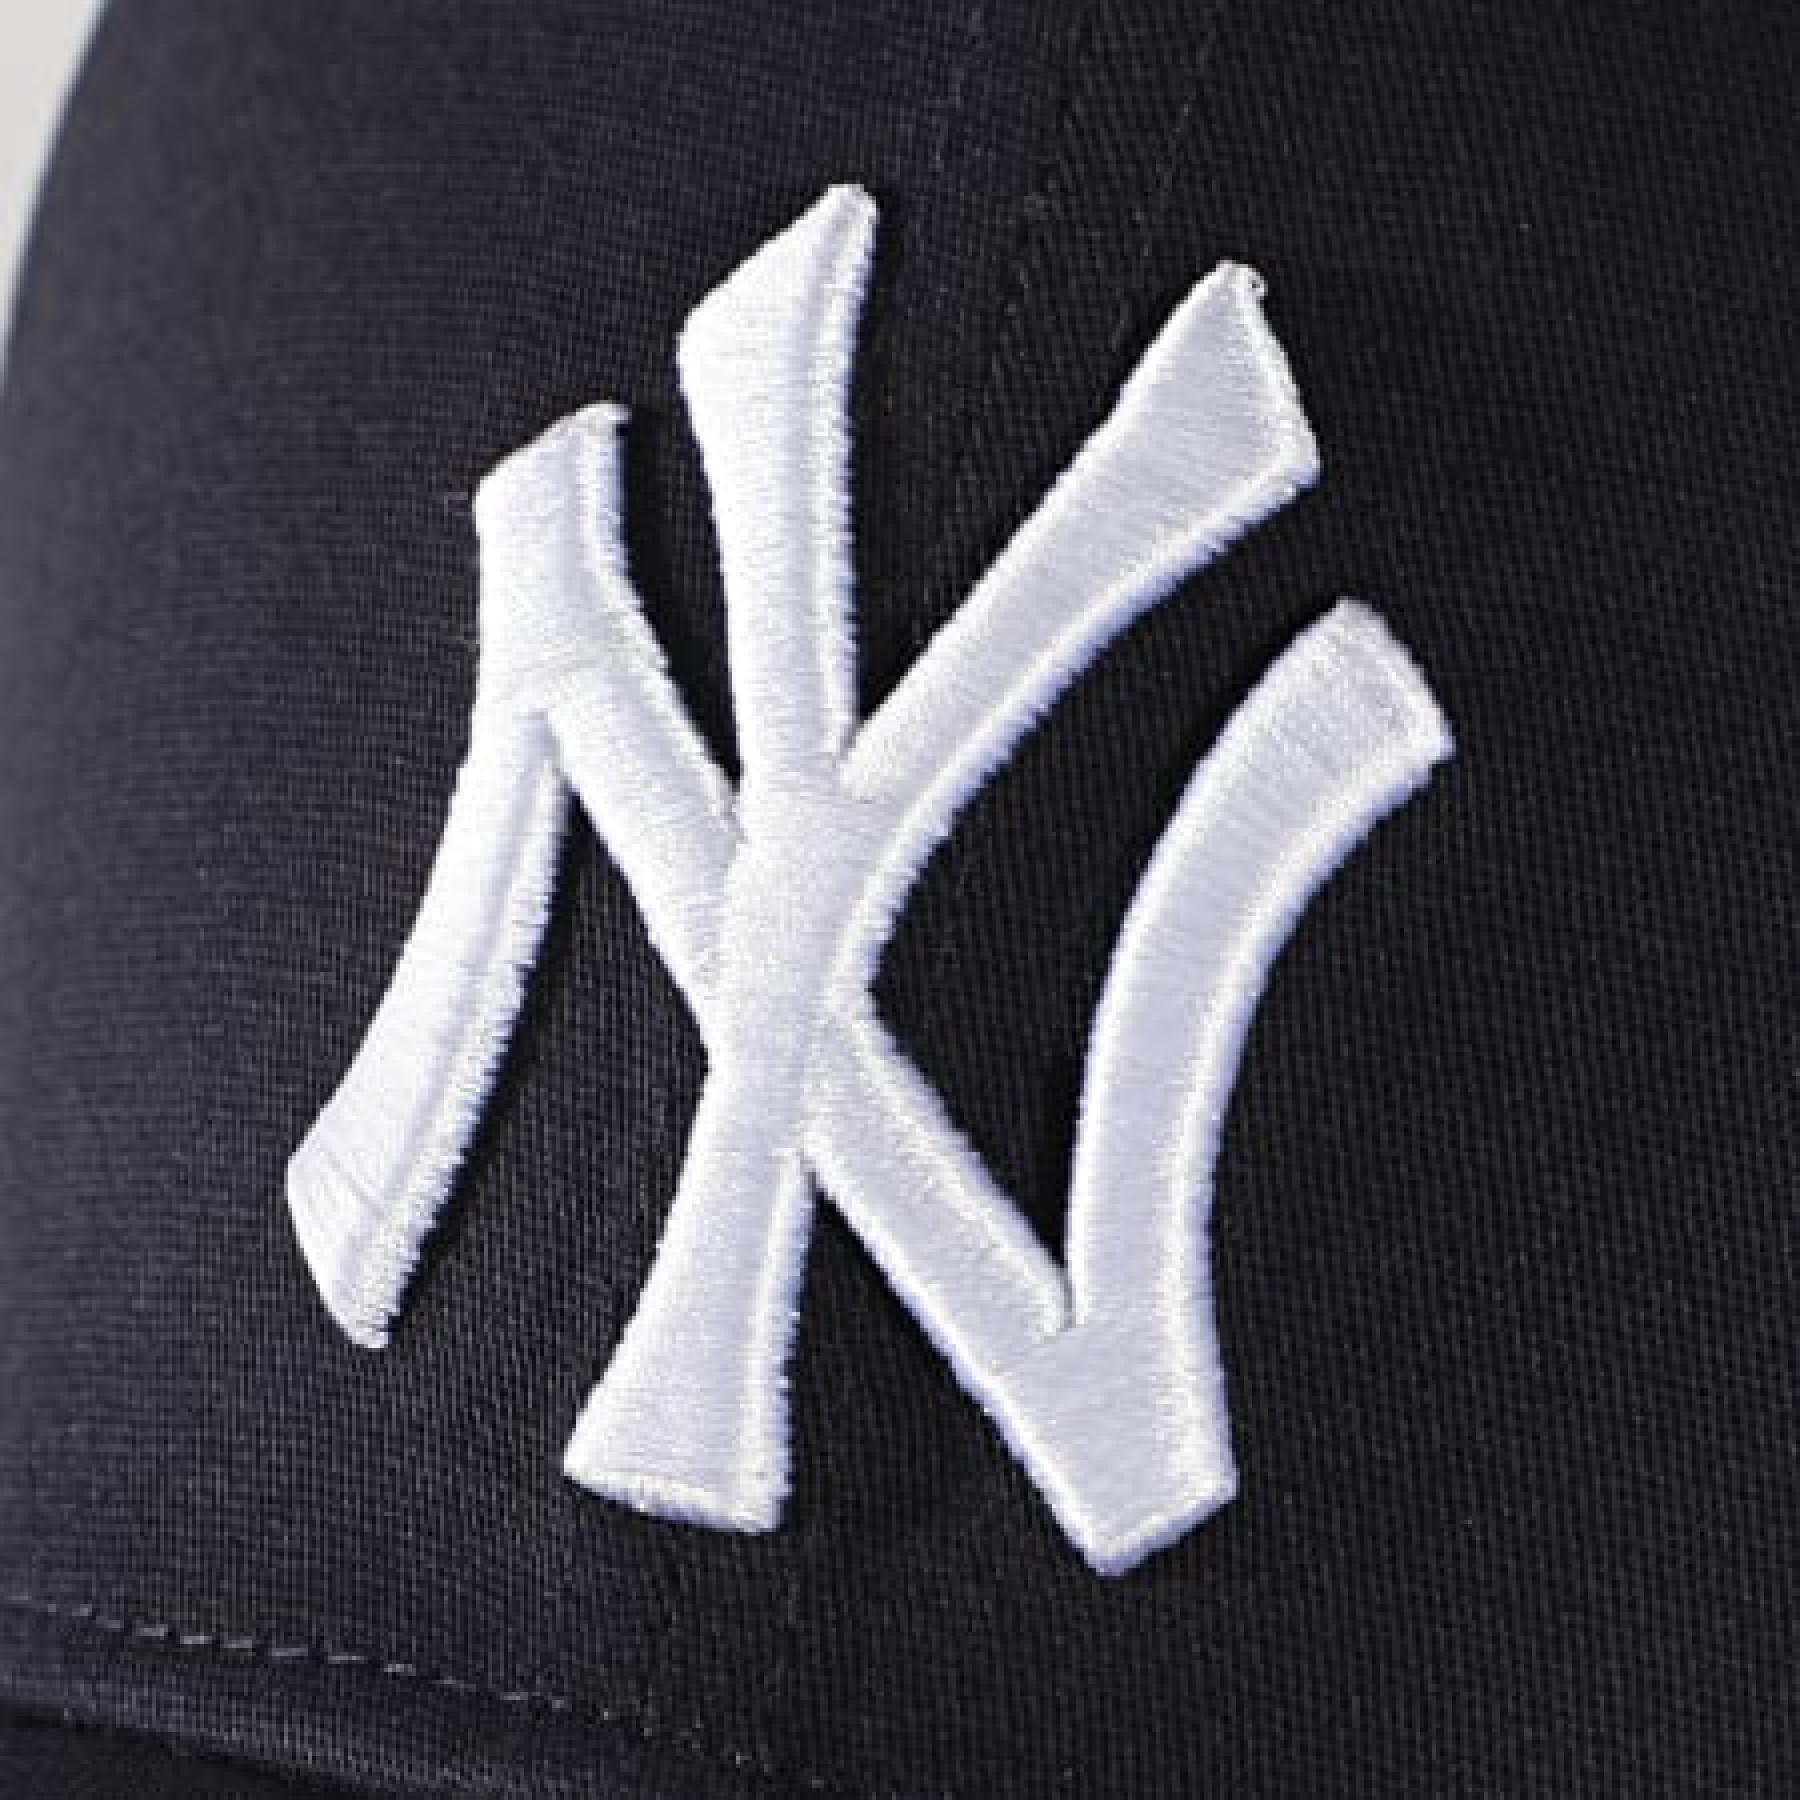 Cap New Era Stretch New York Yankees